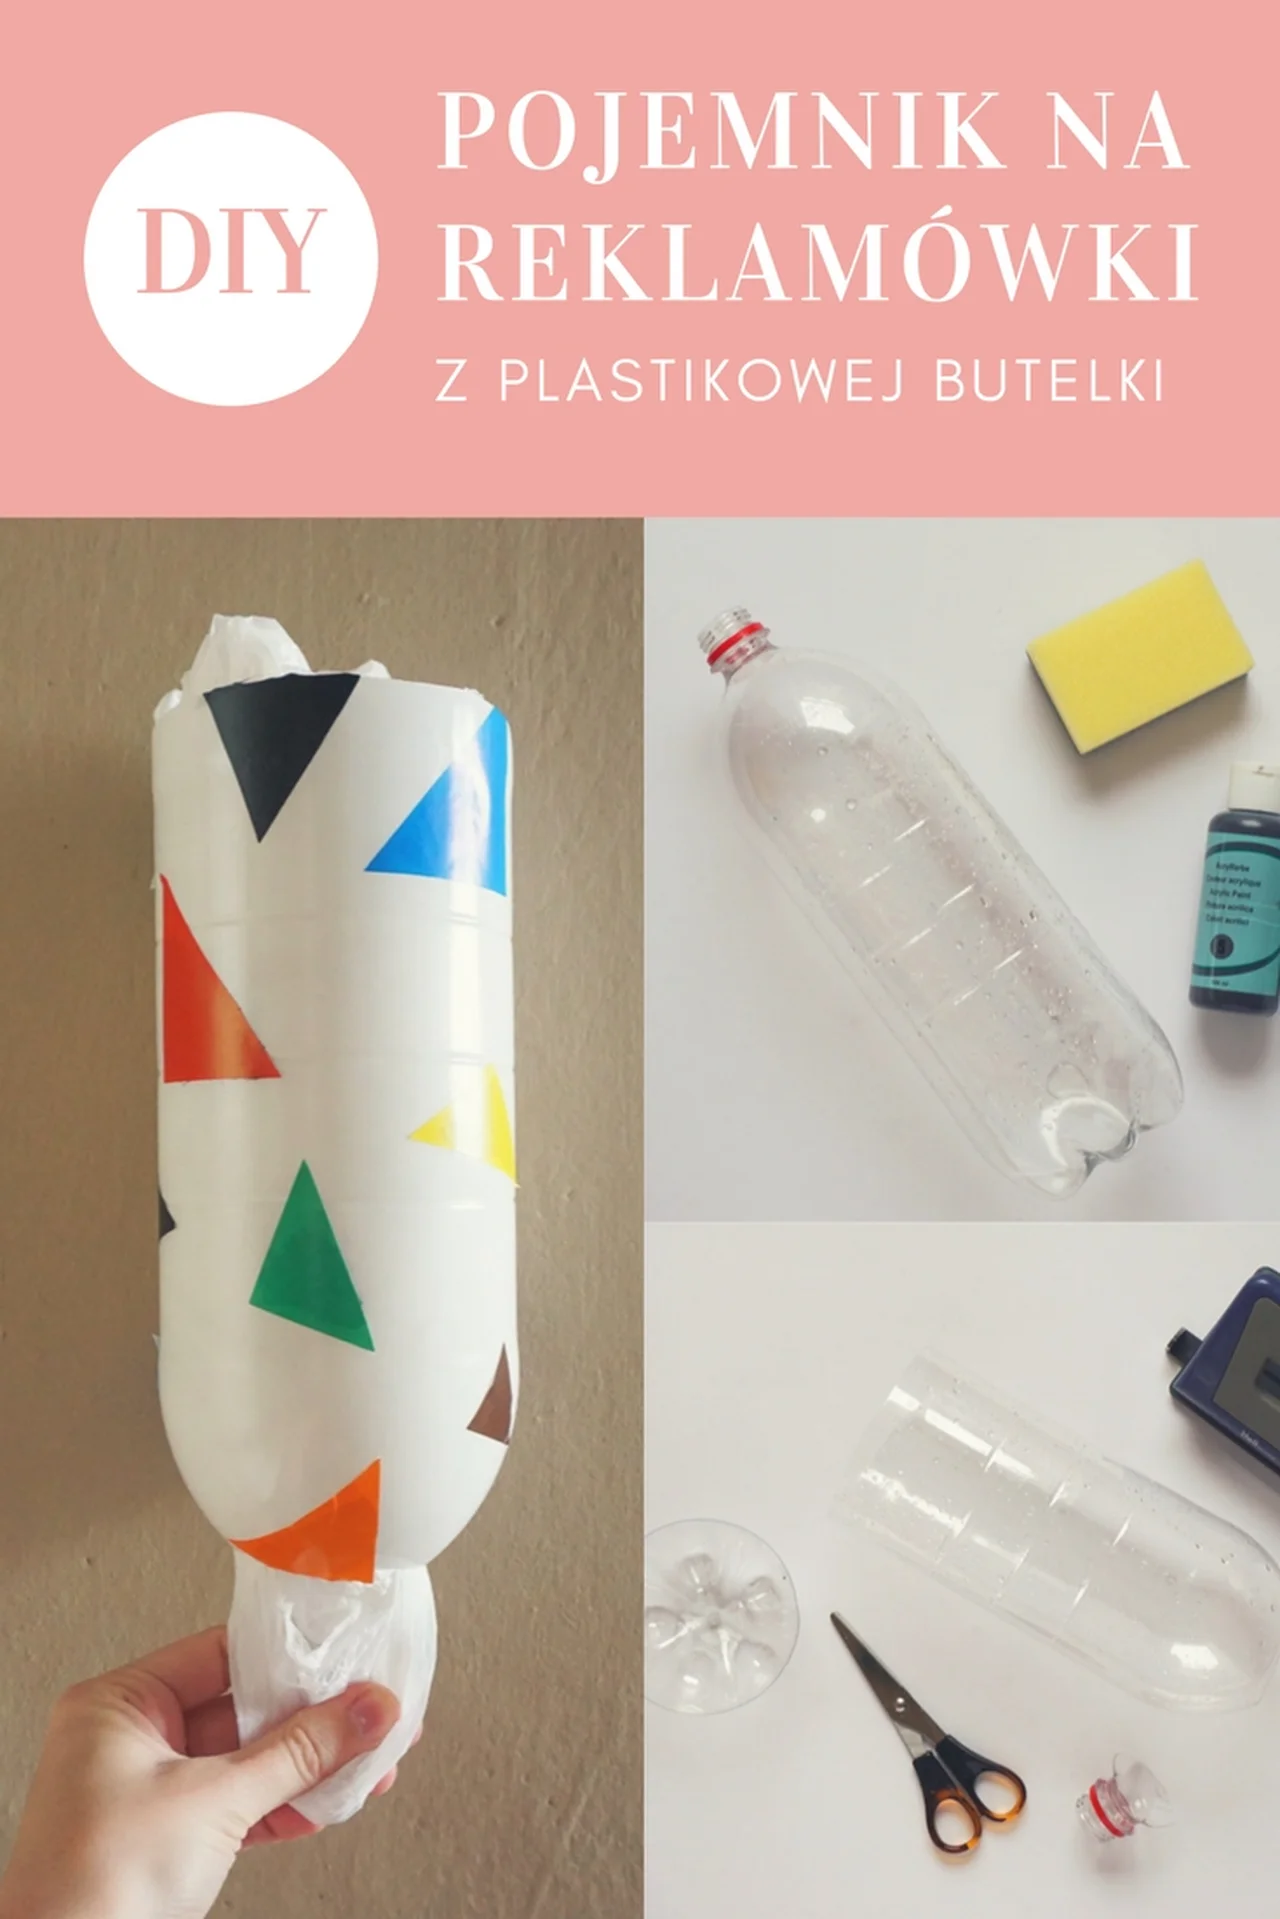 DIY Pojemnik na reklamówki z plastikowej butelki